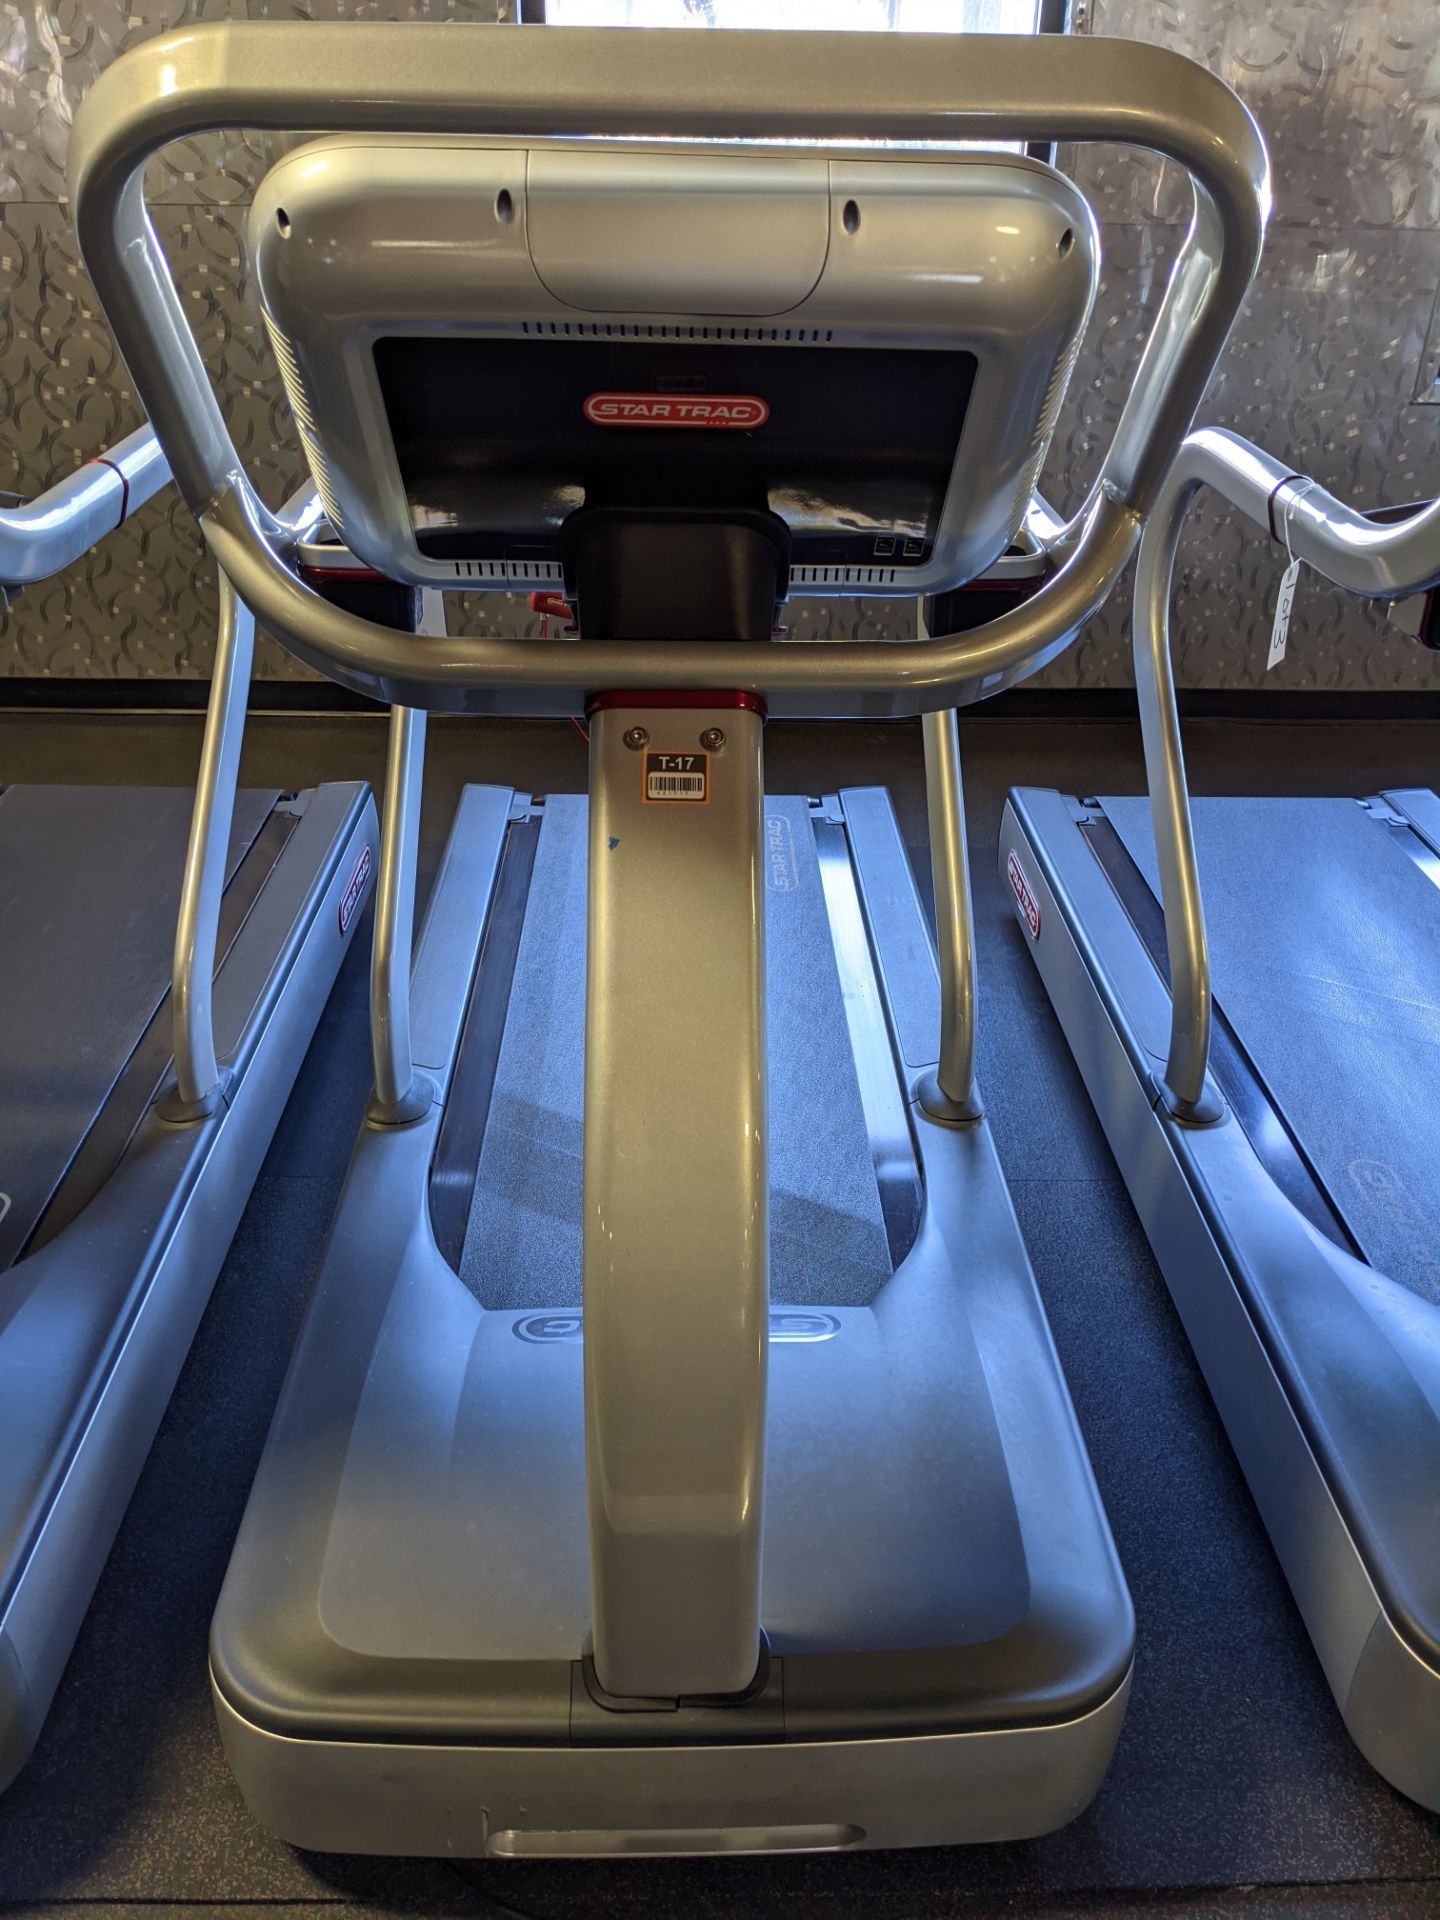 Star Trac Treadmill - Image 3 of 4